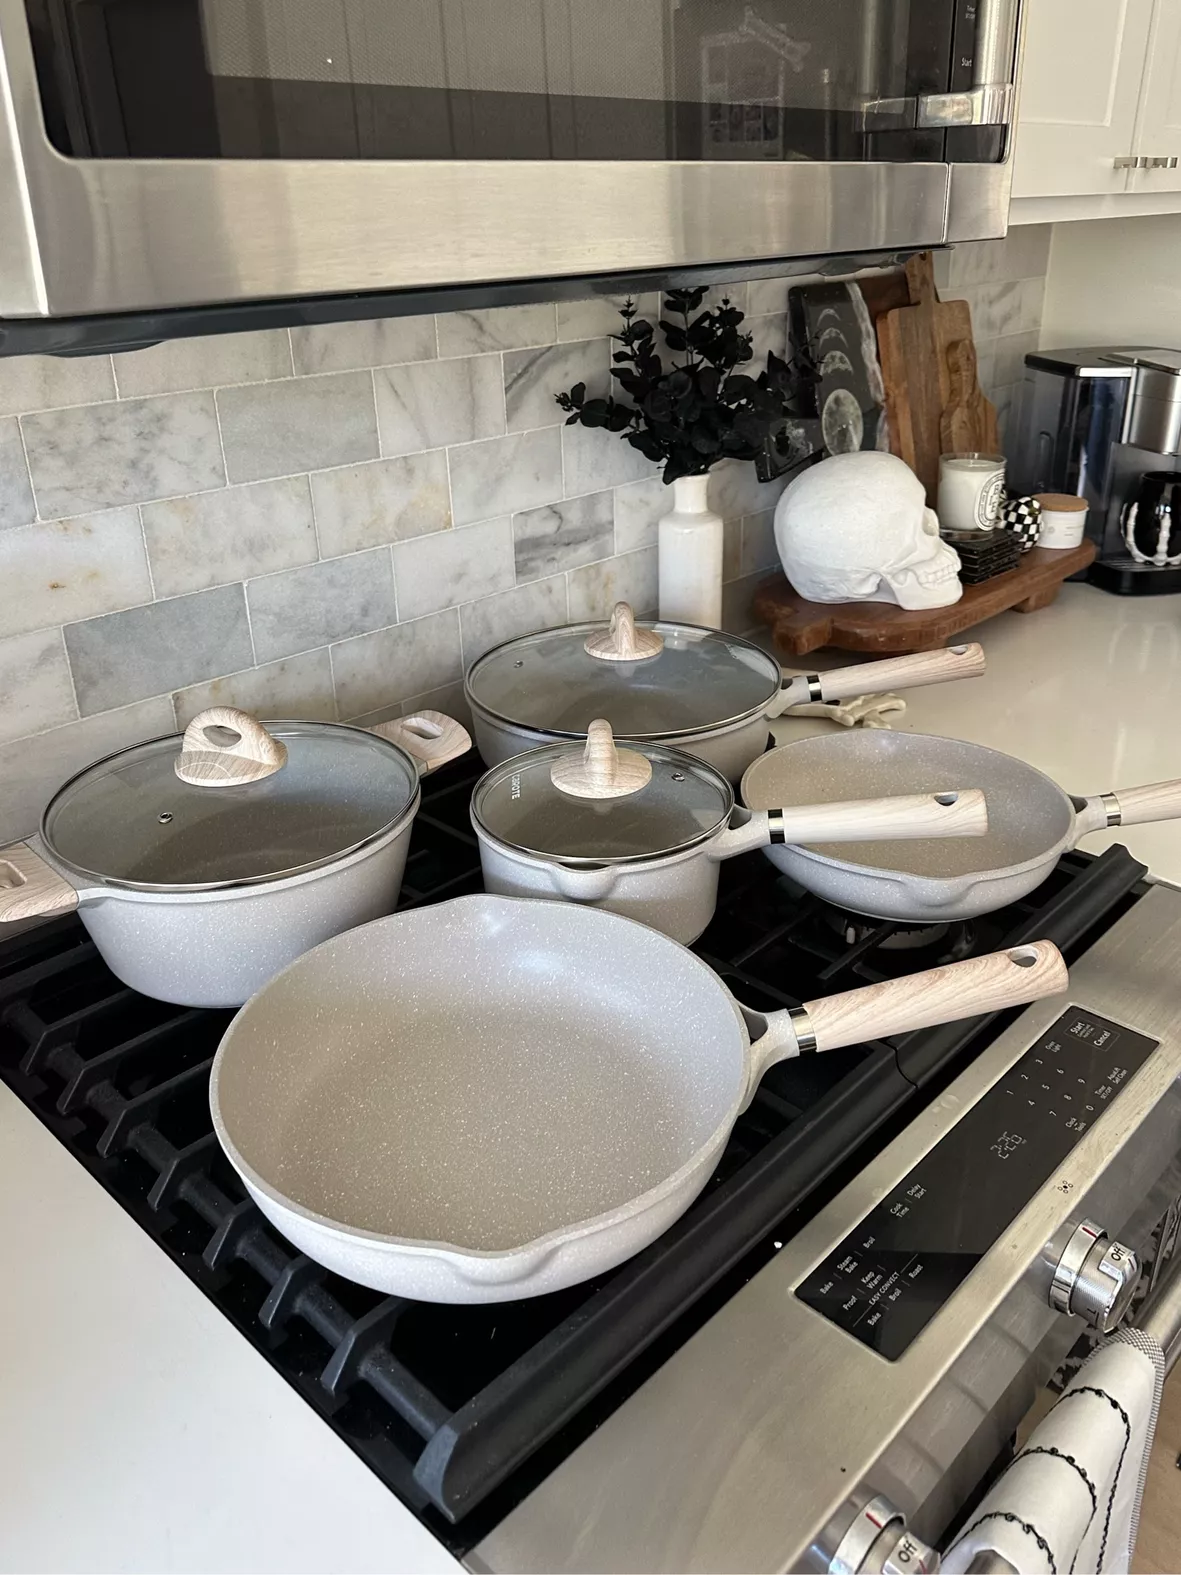 Carote Nonstick Pots and Pans Set, 8 Pcs Granite Stone Kitchen